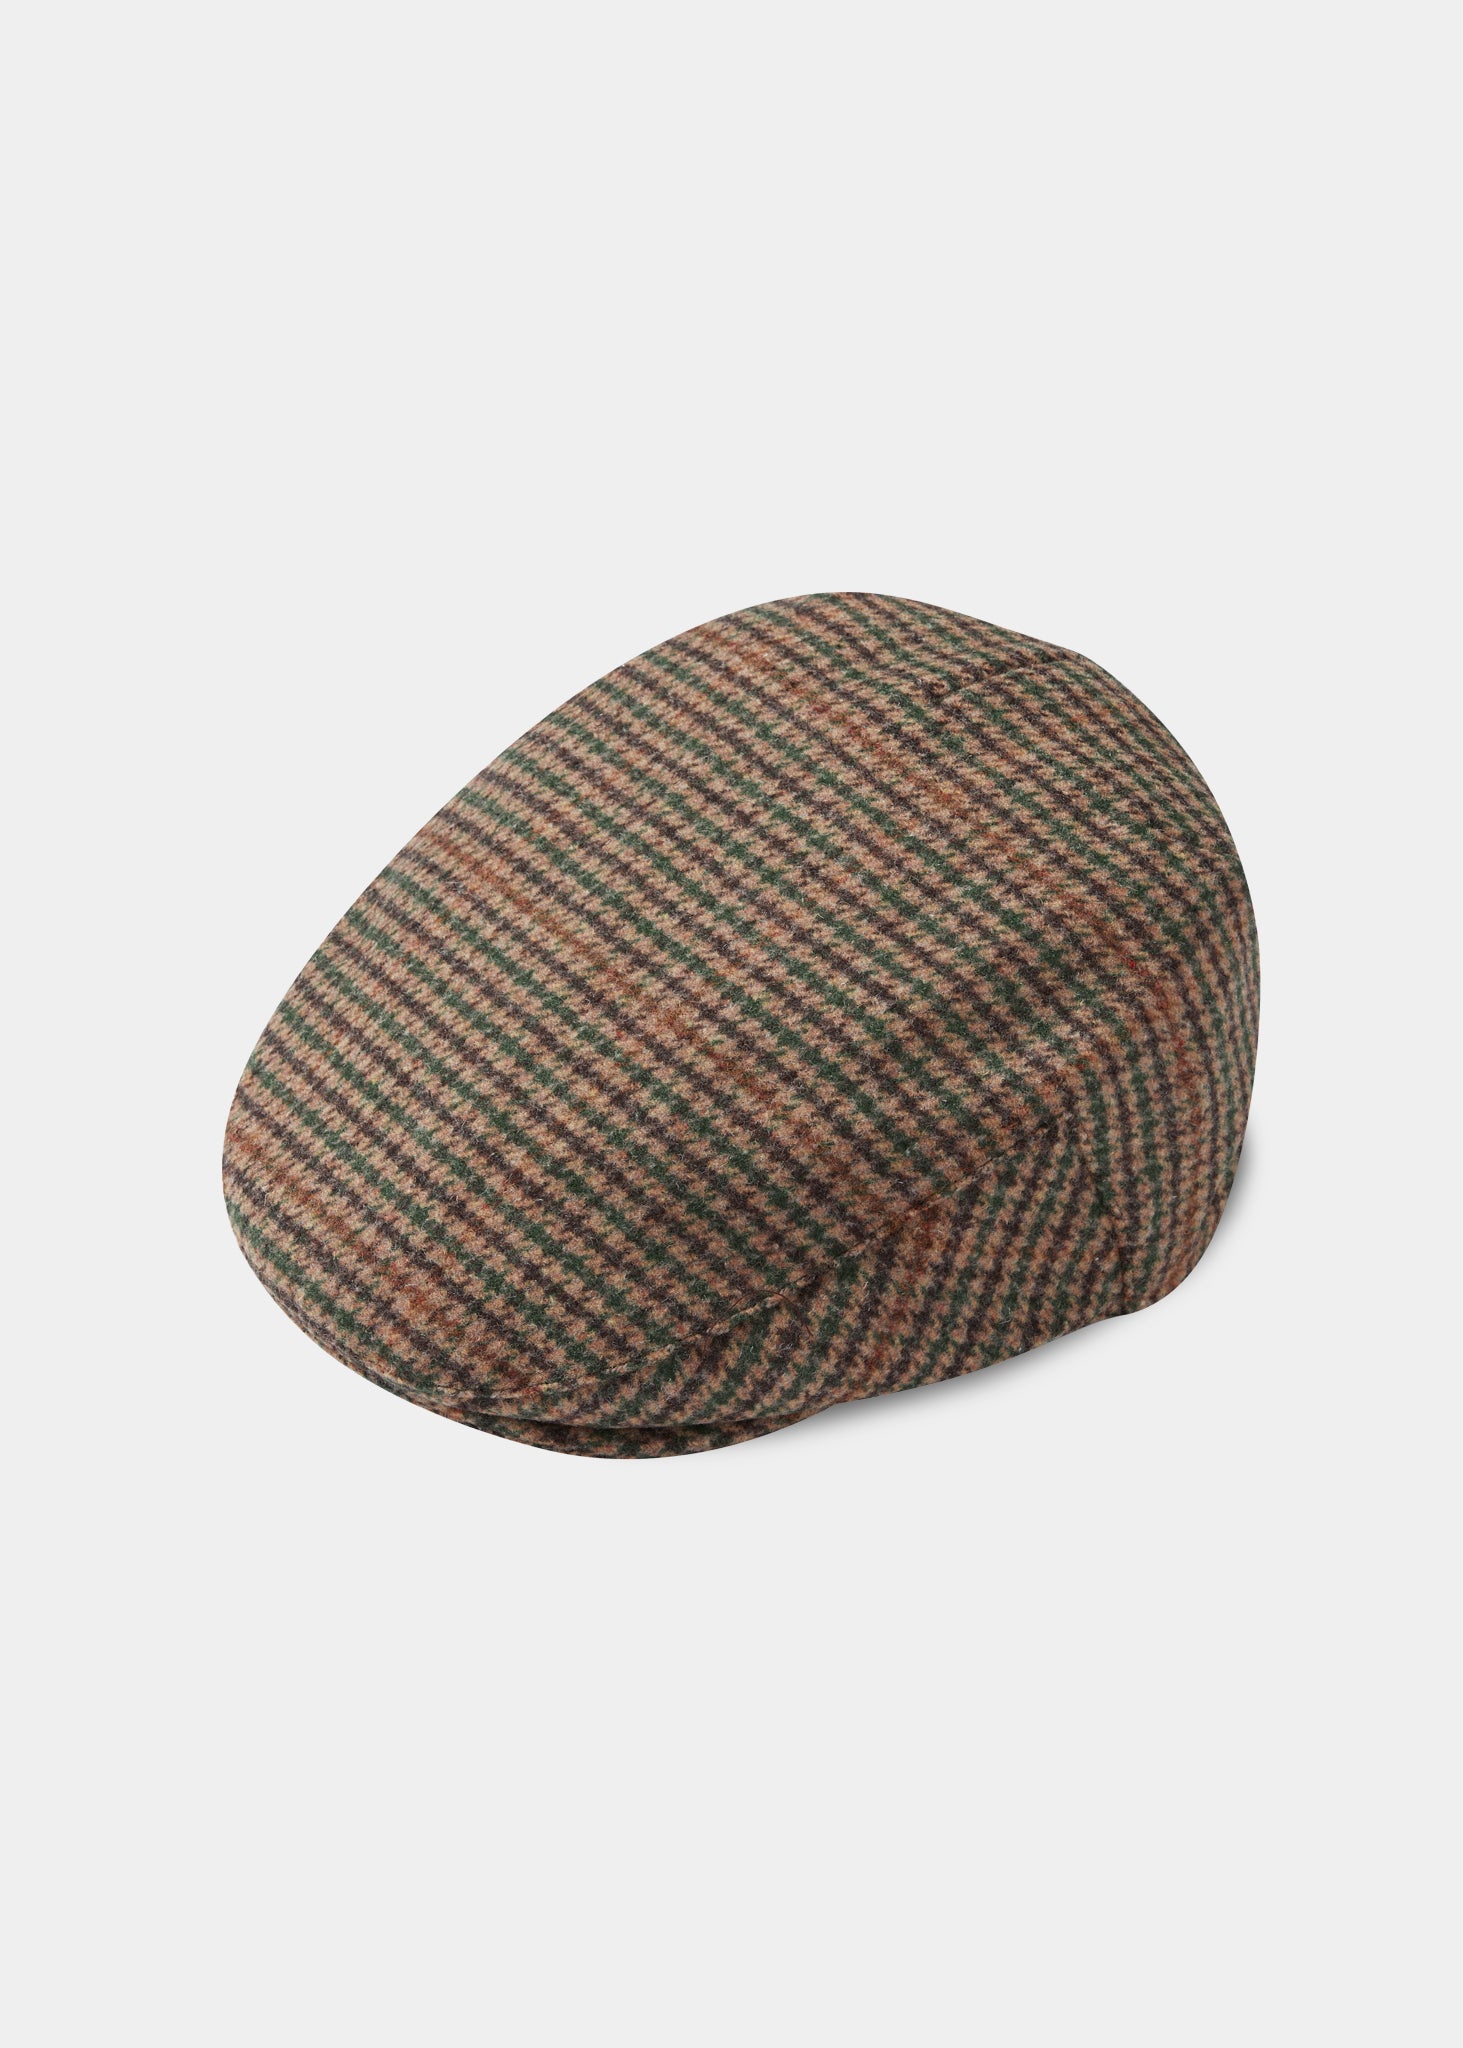 Surrey Men's Tweed Flat Cap In Sycamore